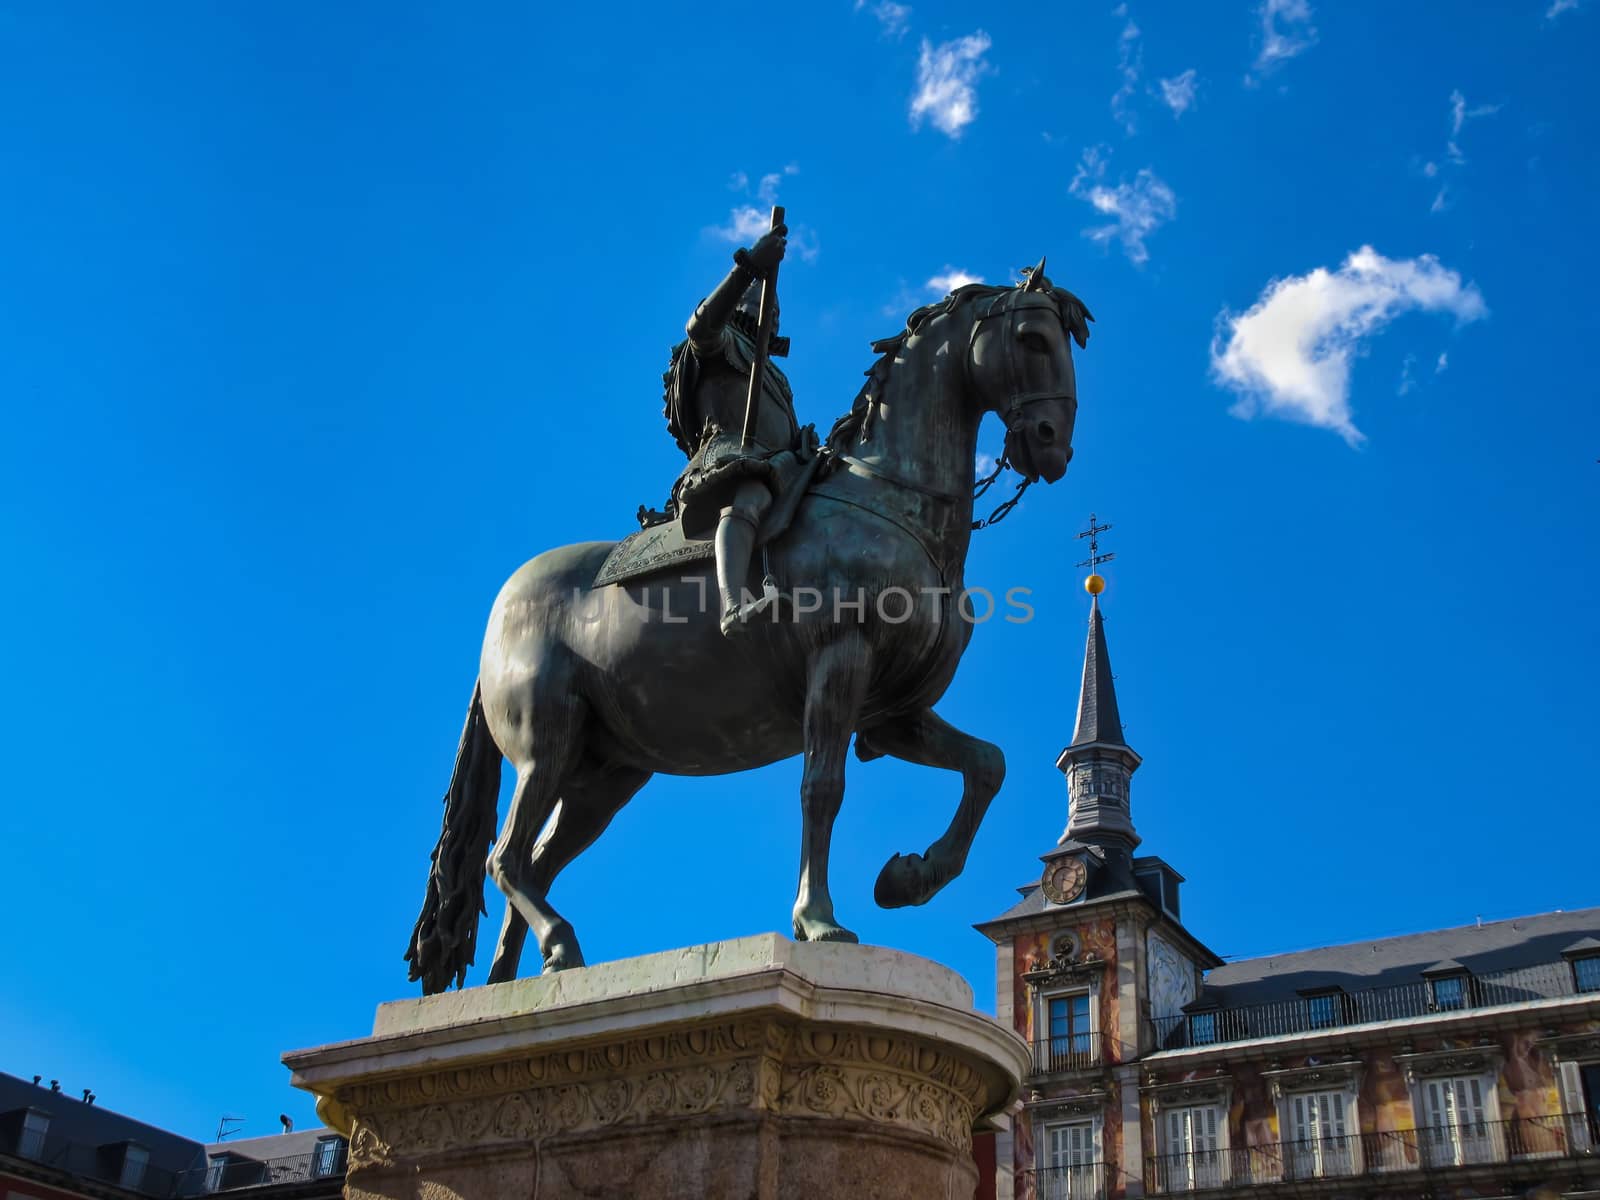 The statue of King Philip III, Madrid by huntz